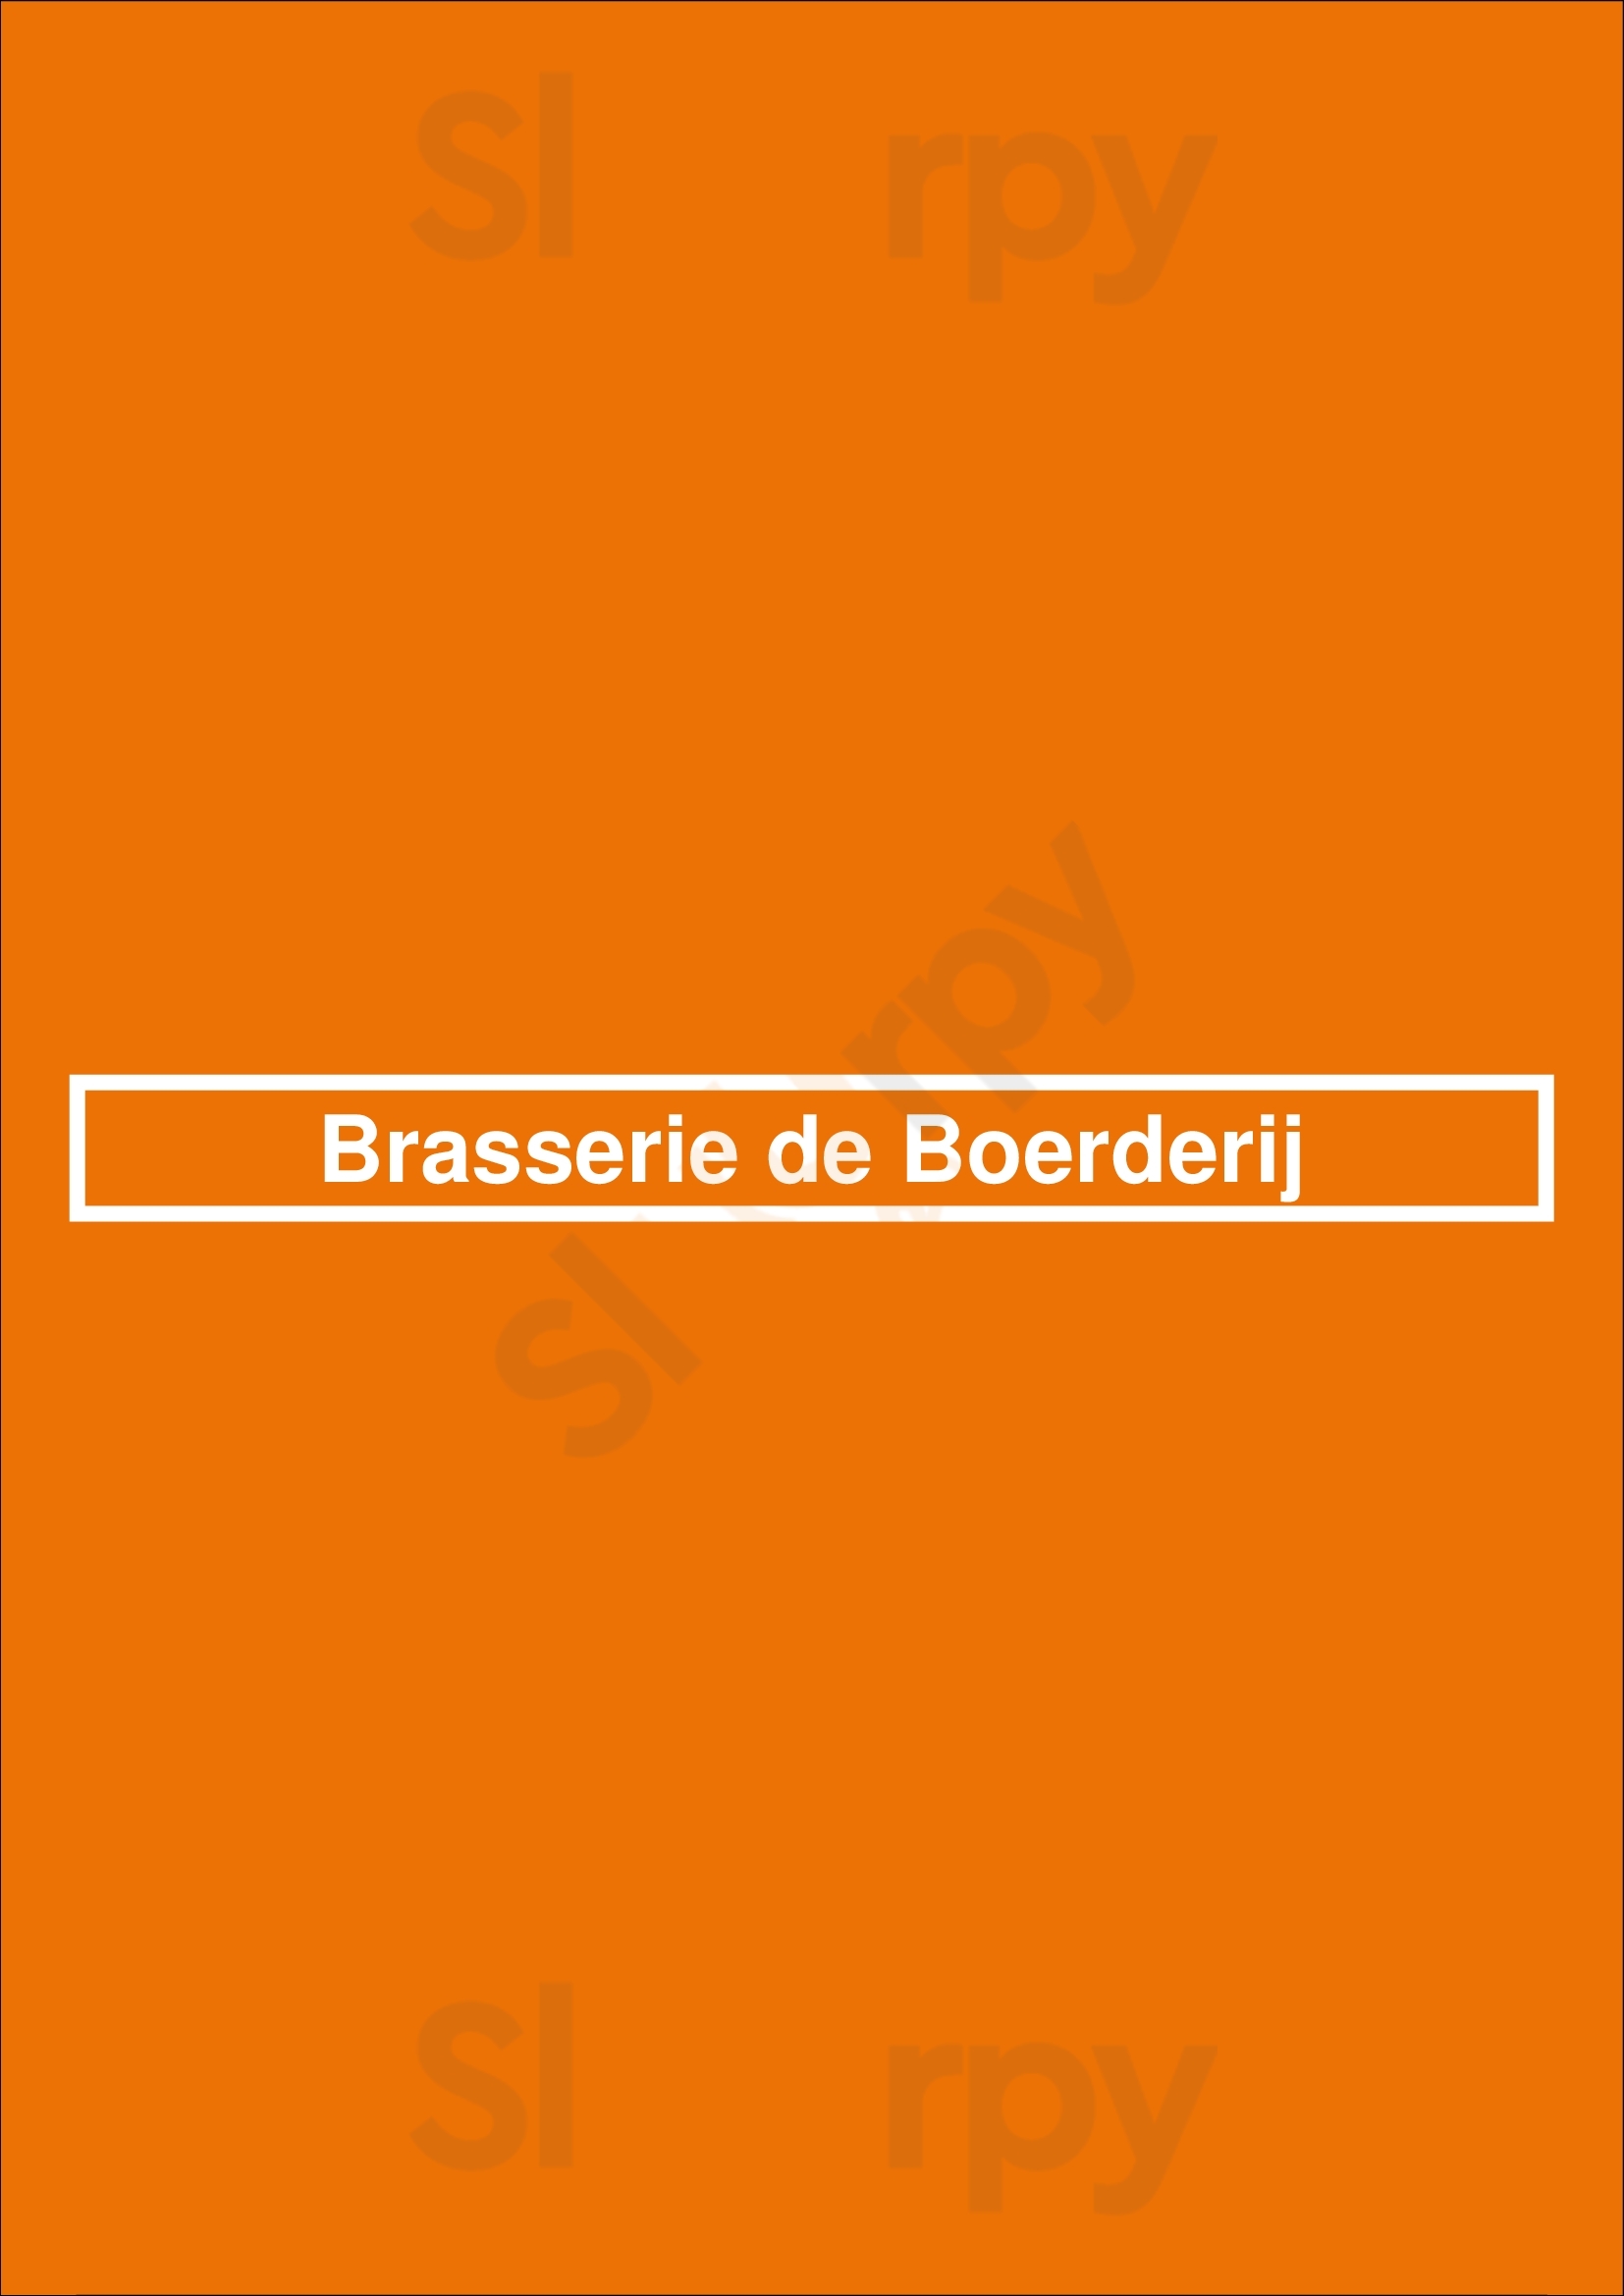 Brasserie De Boerderij Arnhem Menu - 1